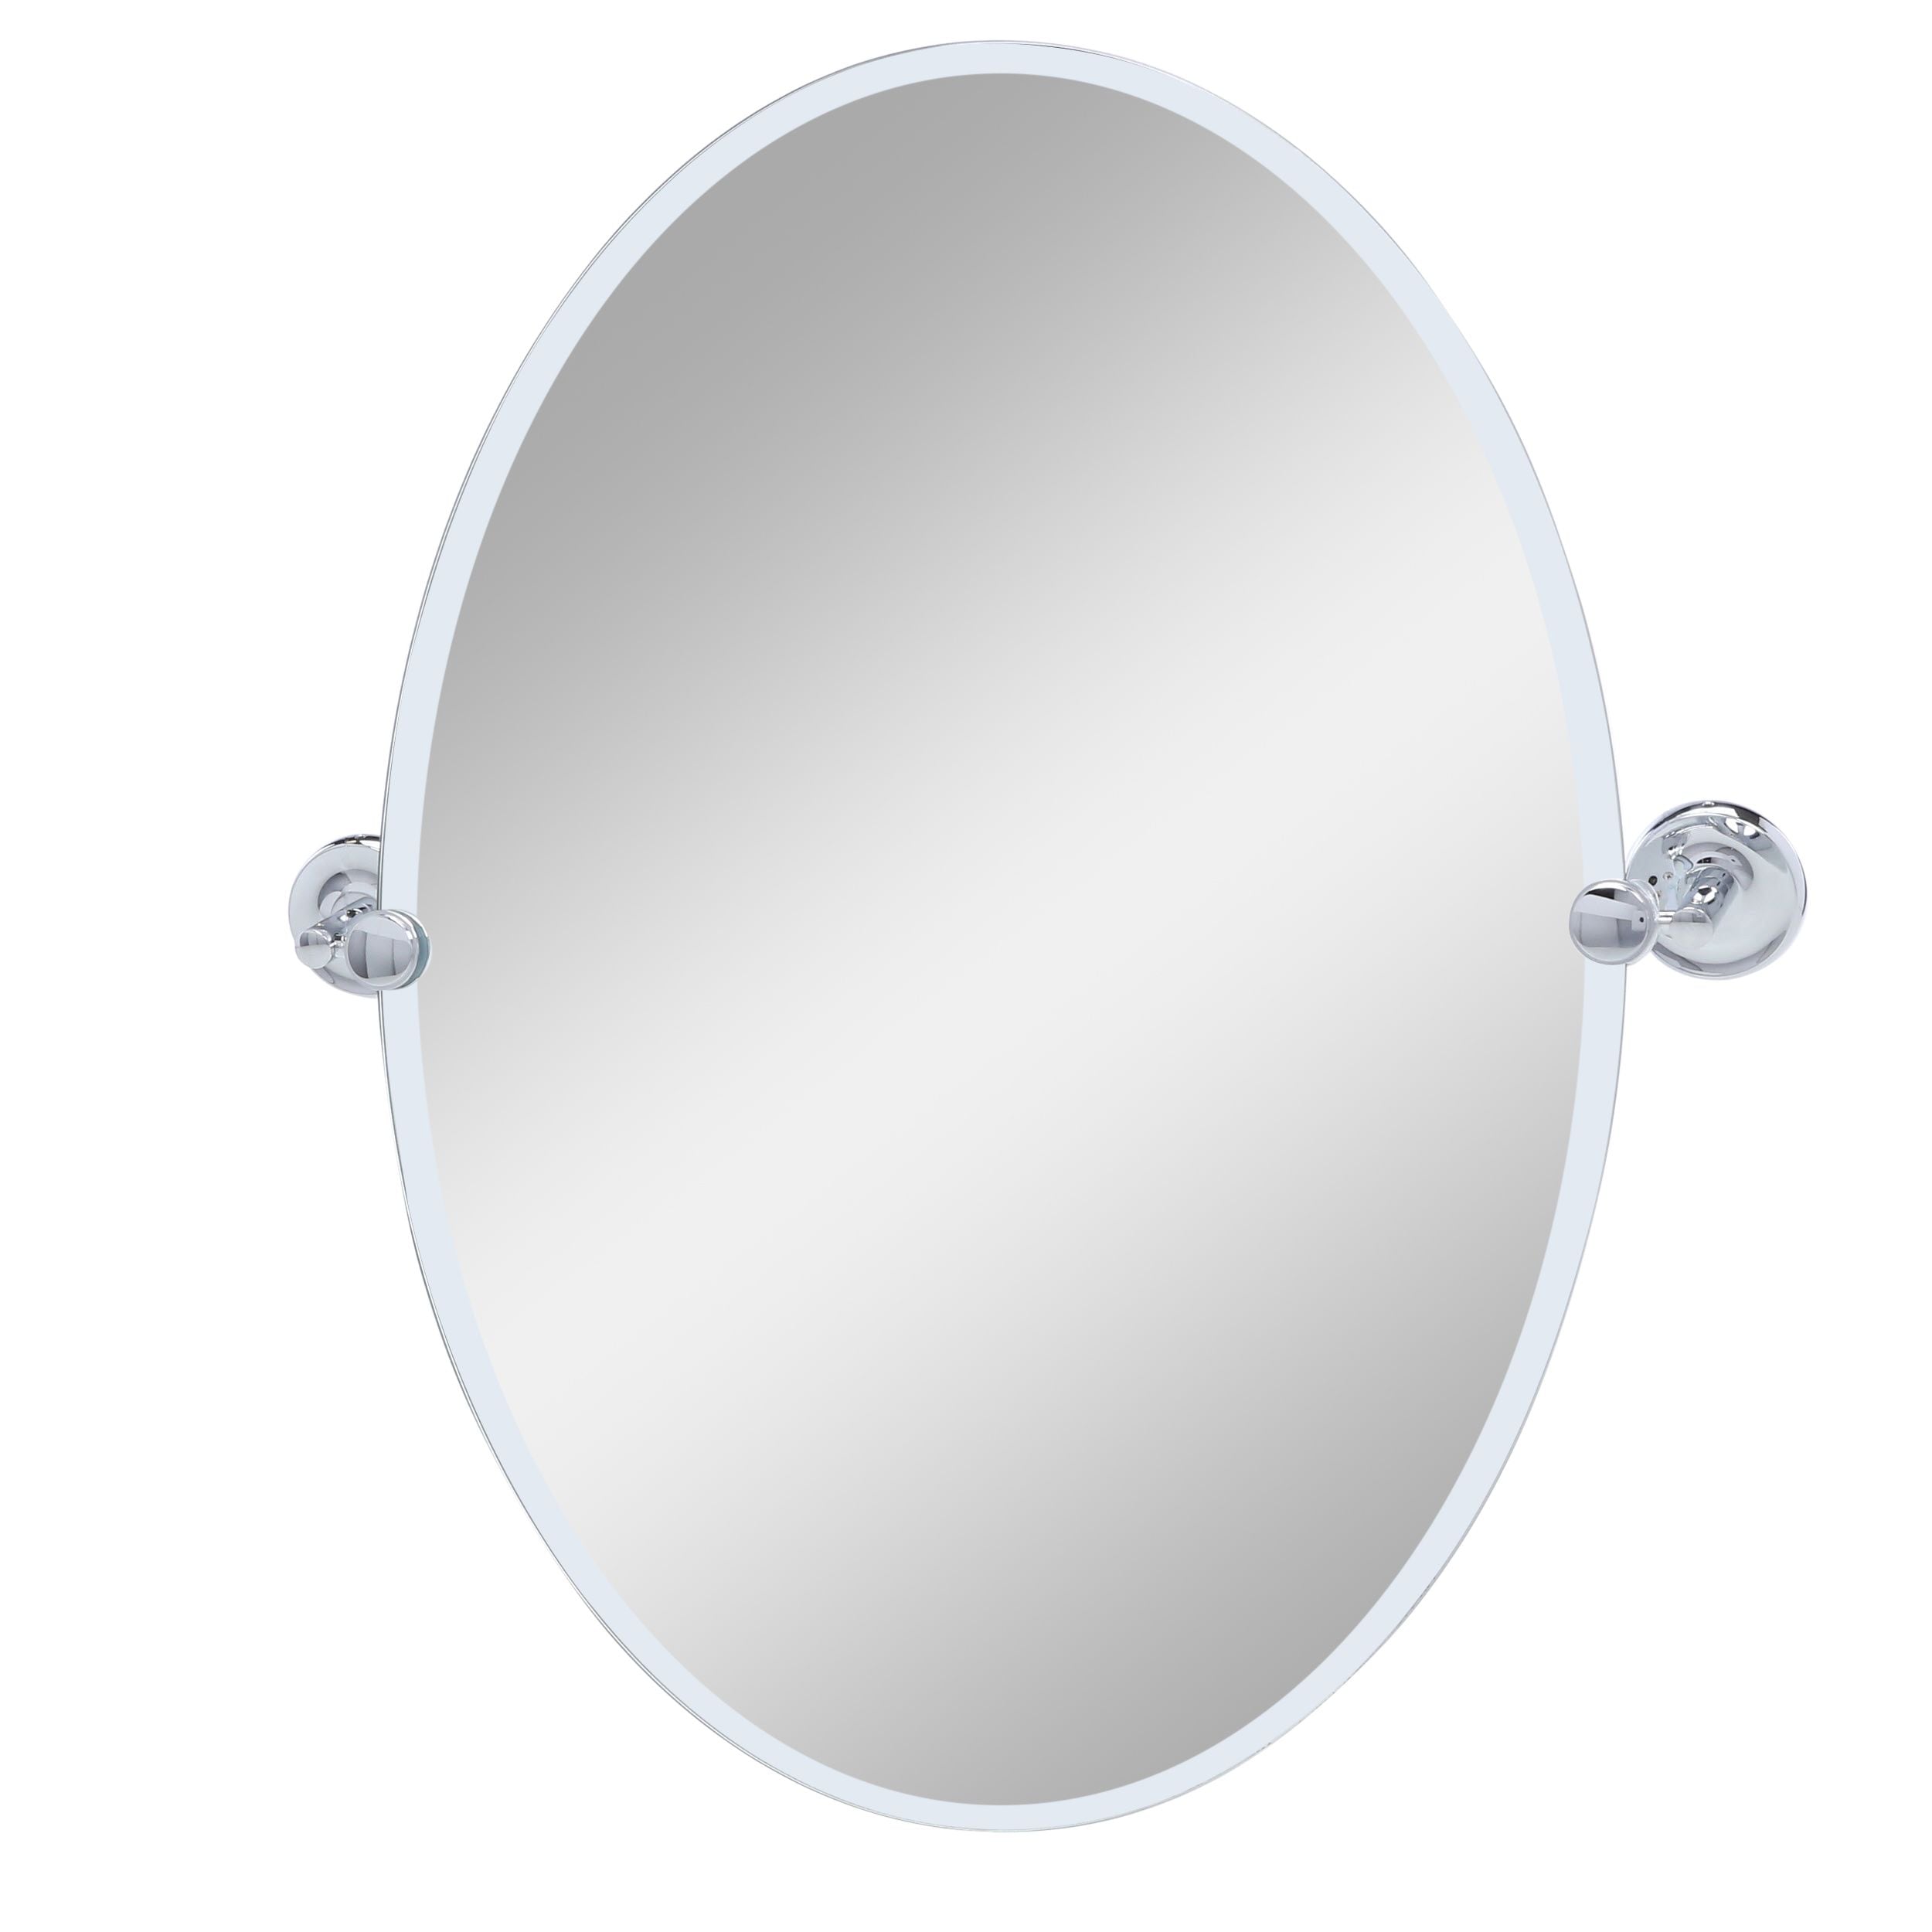 Gatco 1801 Flush Mount Frameless Oval Mirror, 32-inch - 2